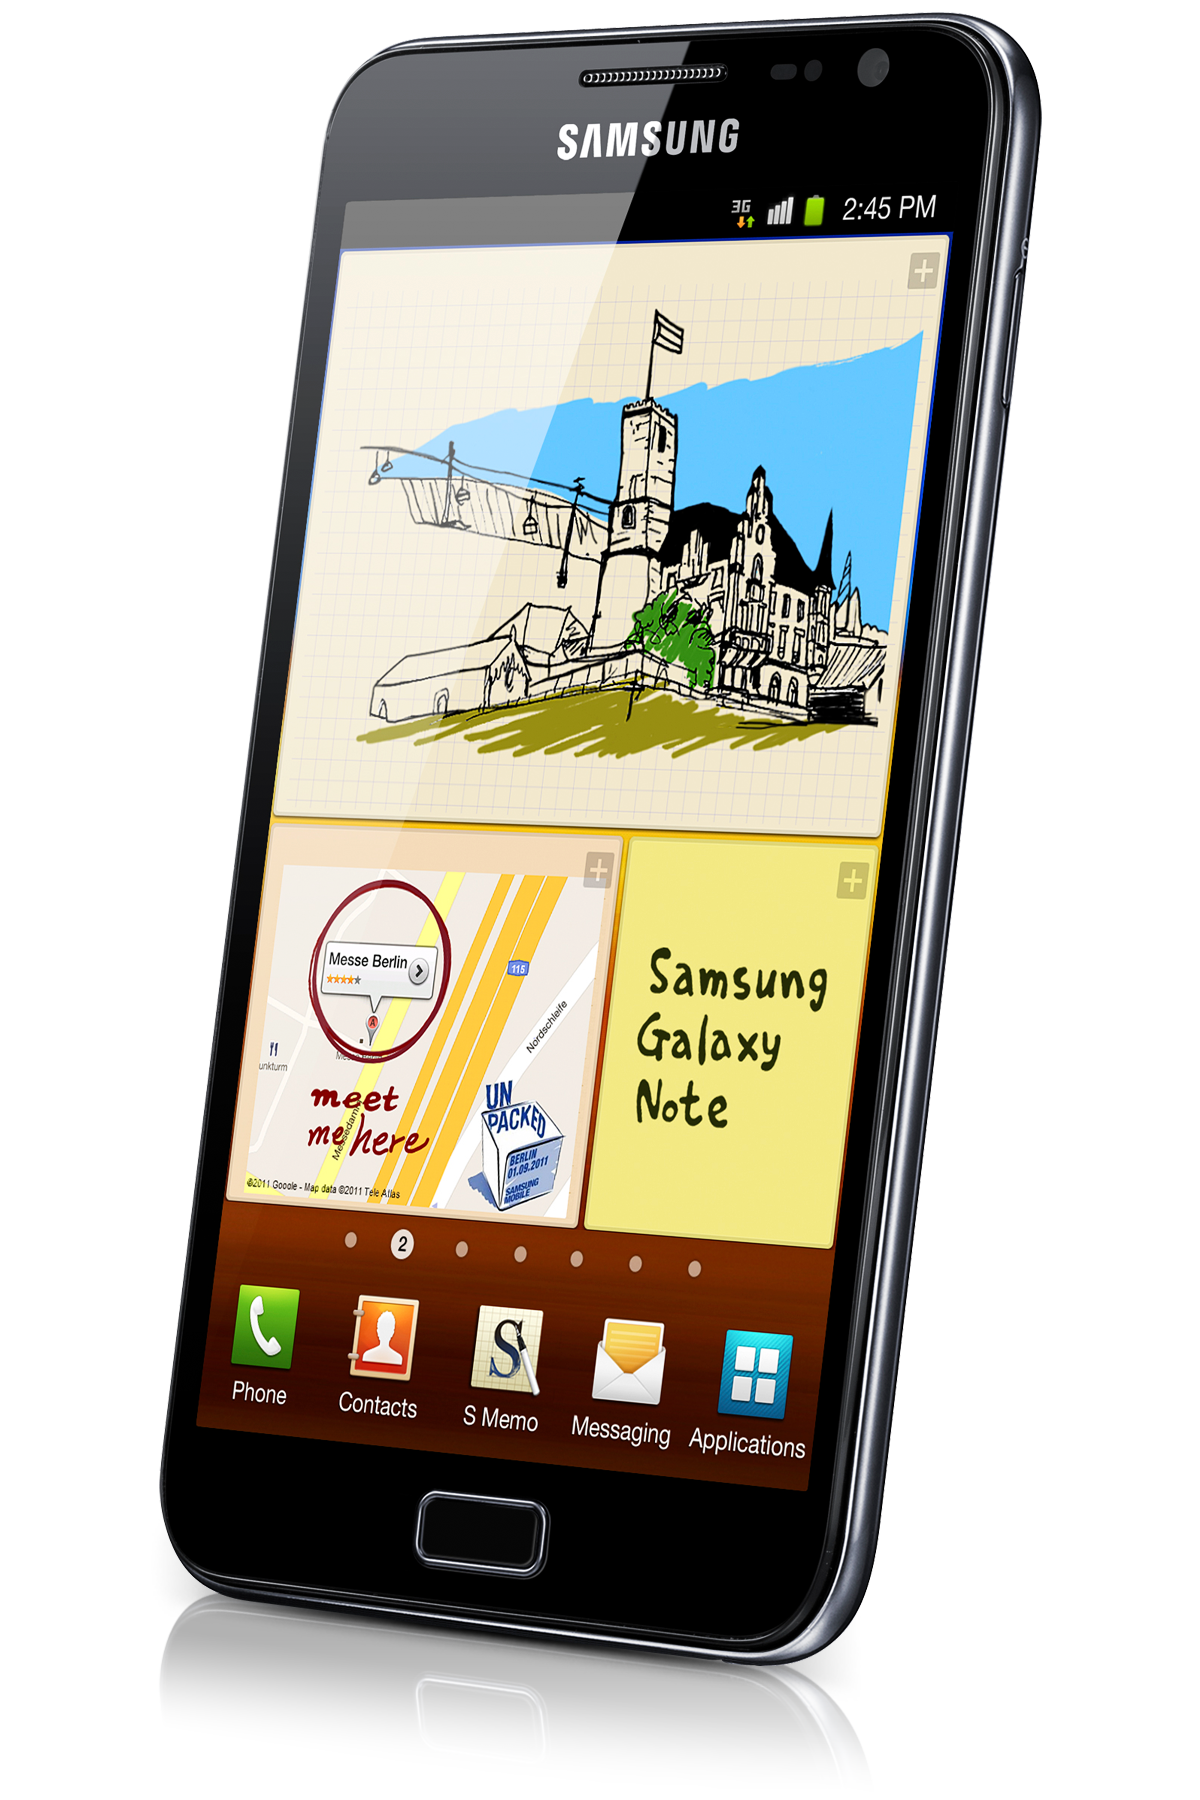 Galaxy note gt. Самсунг галакси n7000. Galaxy Note n7000. Galaxy Note gt-n7000. Samsung Galaxy Note gt-n7000 иконки.